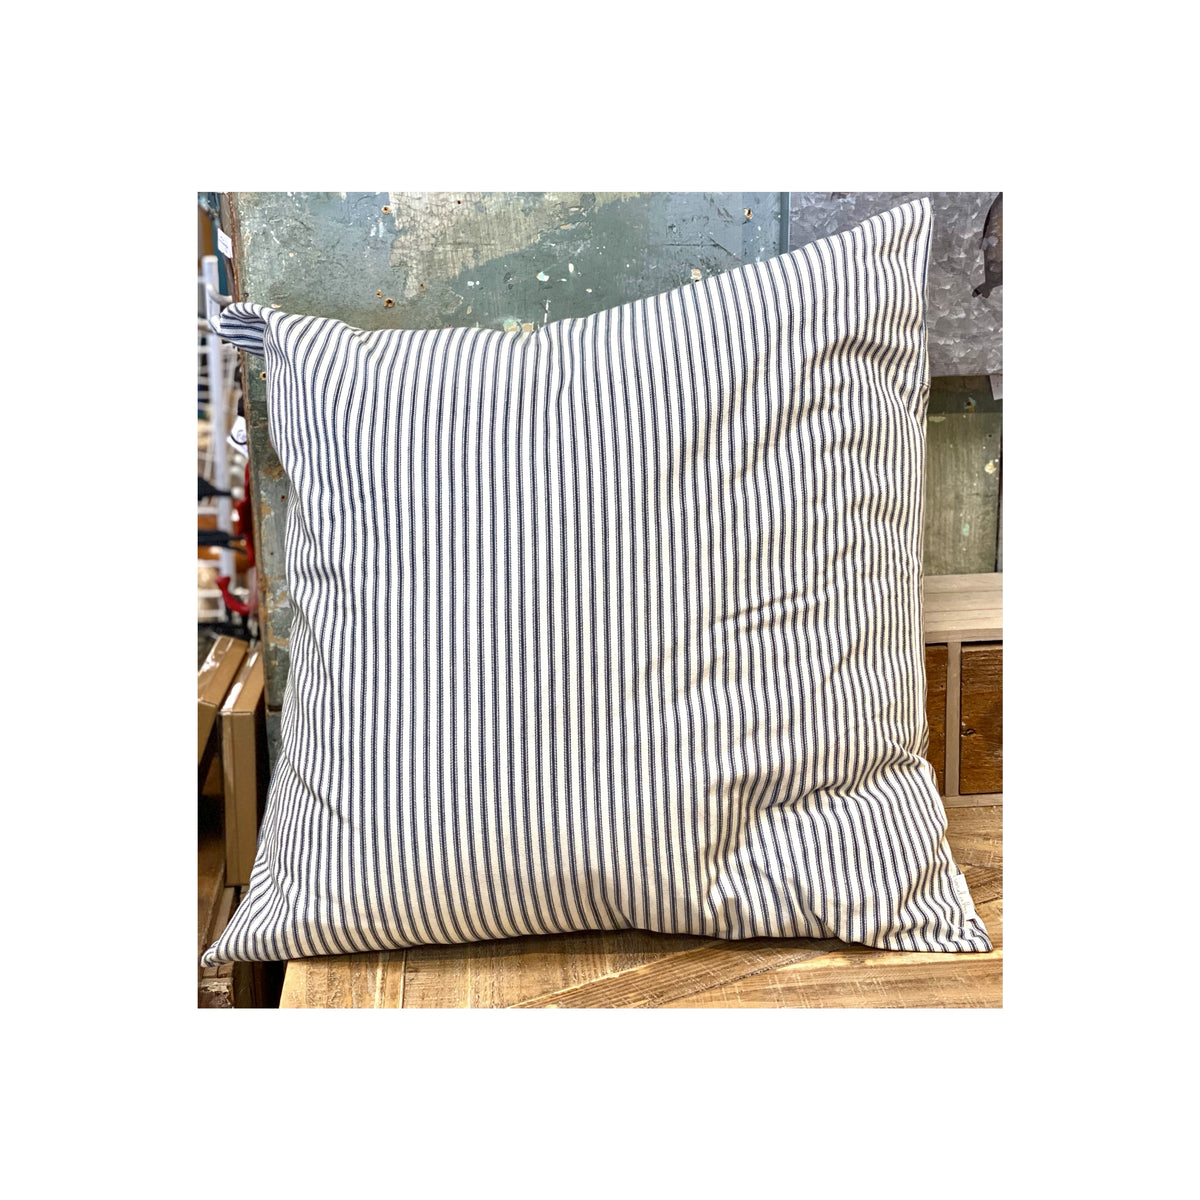 Blue & Cream Striped Pillow